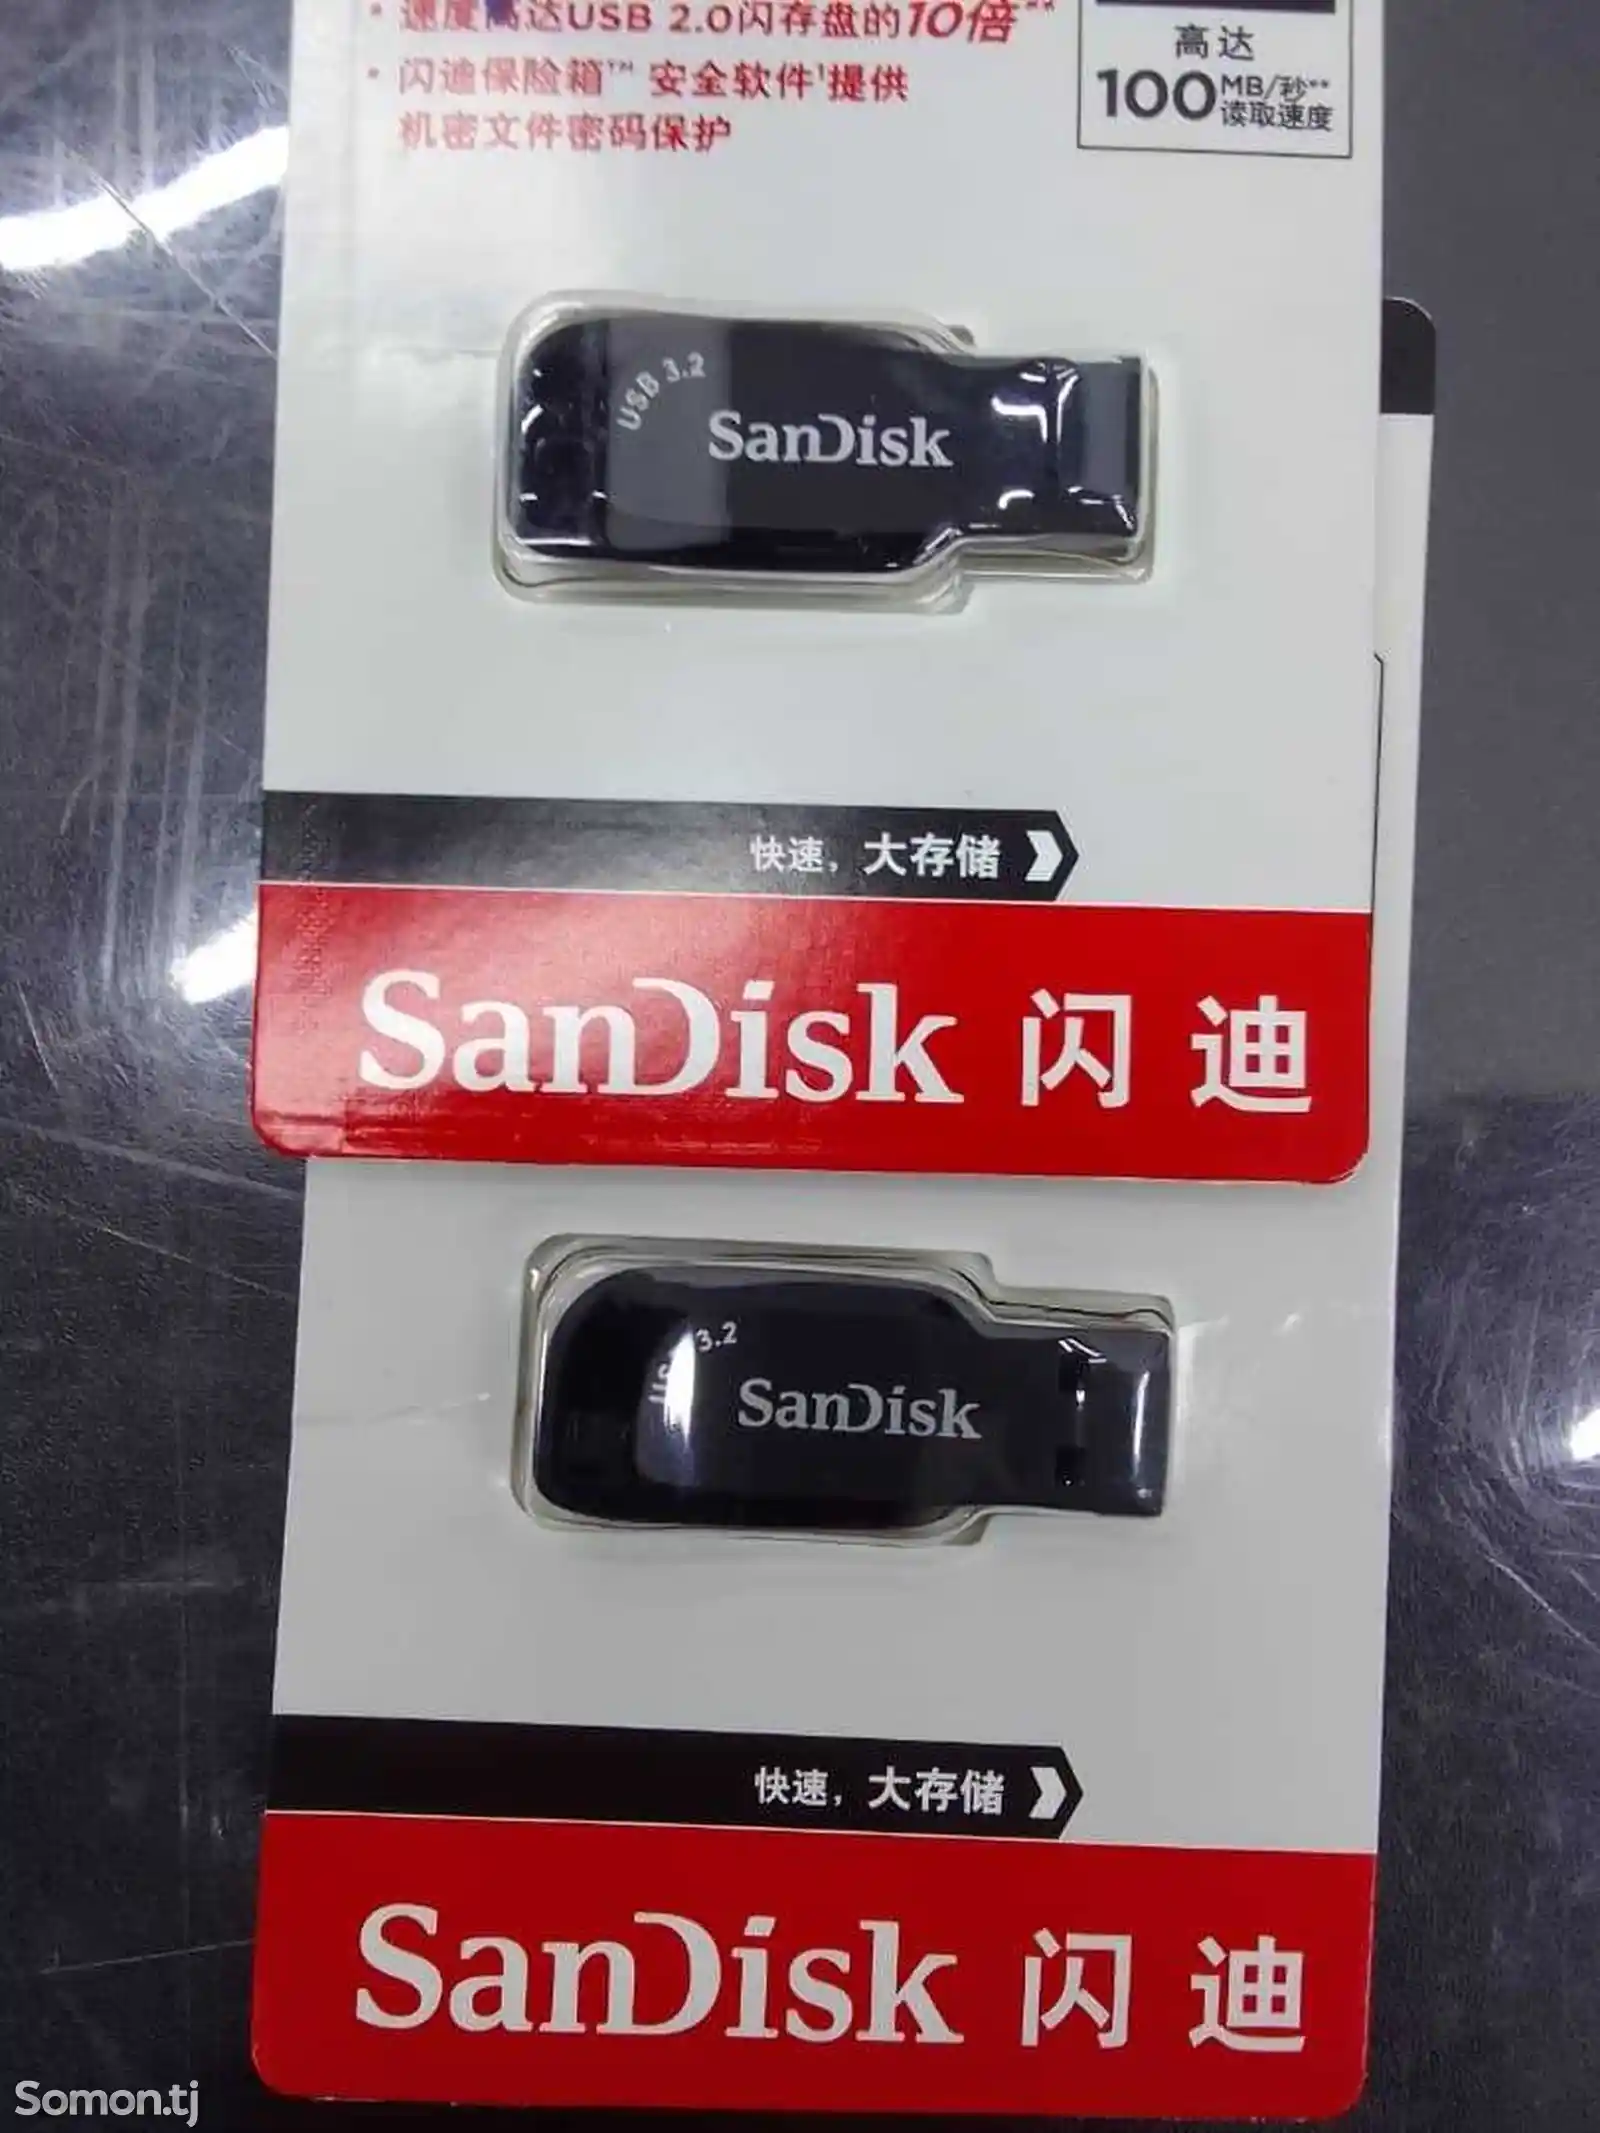 Флешка USB Sandisk 32gb